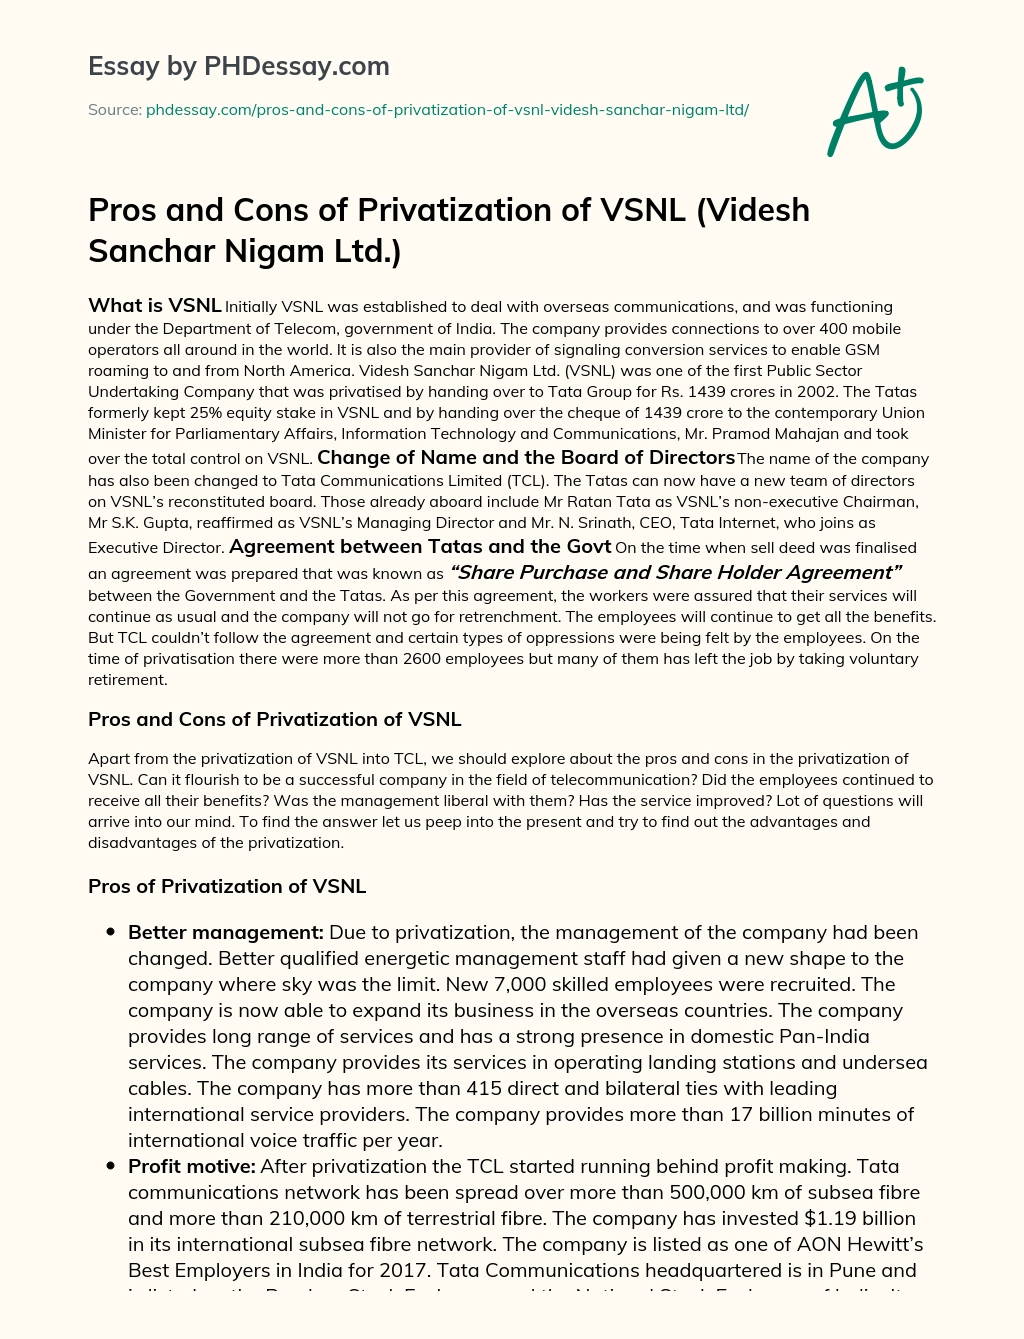 Pros and Cons of Privatization of VSNL (Videsh Sanchar Nigam Ltd.) essay